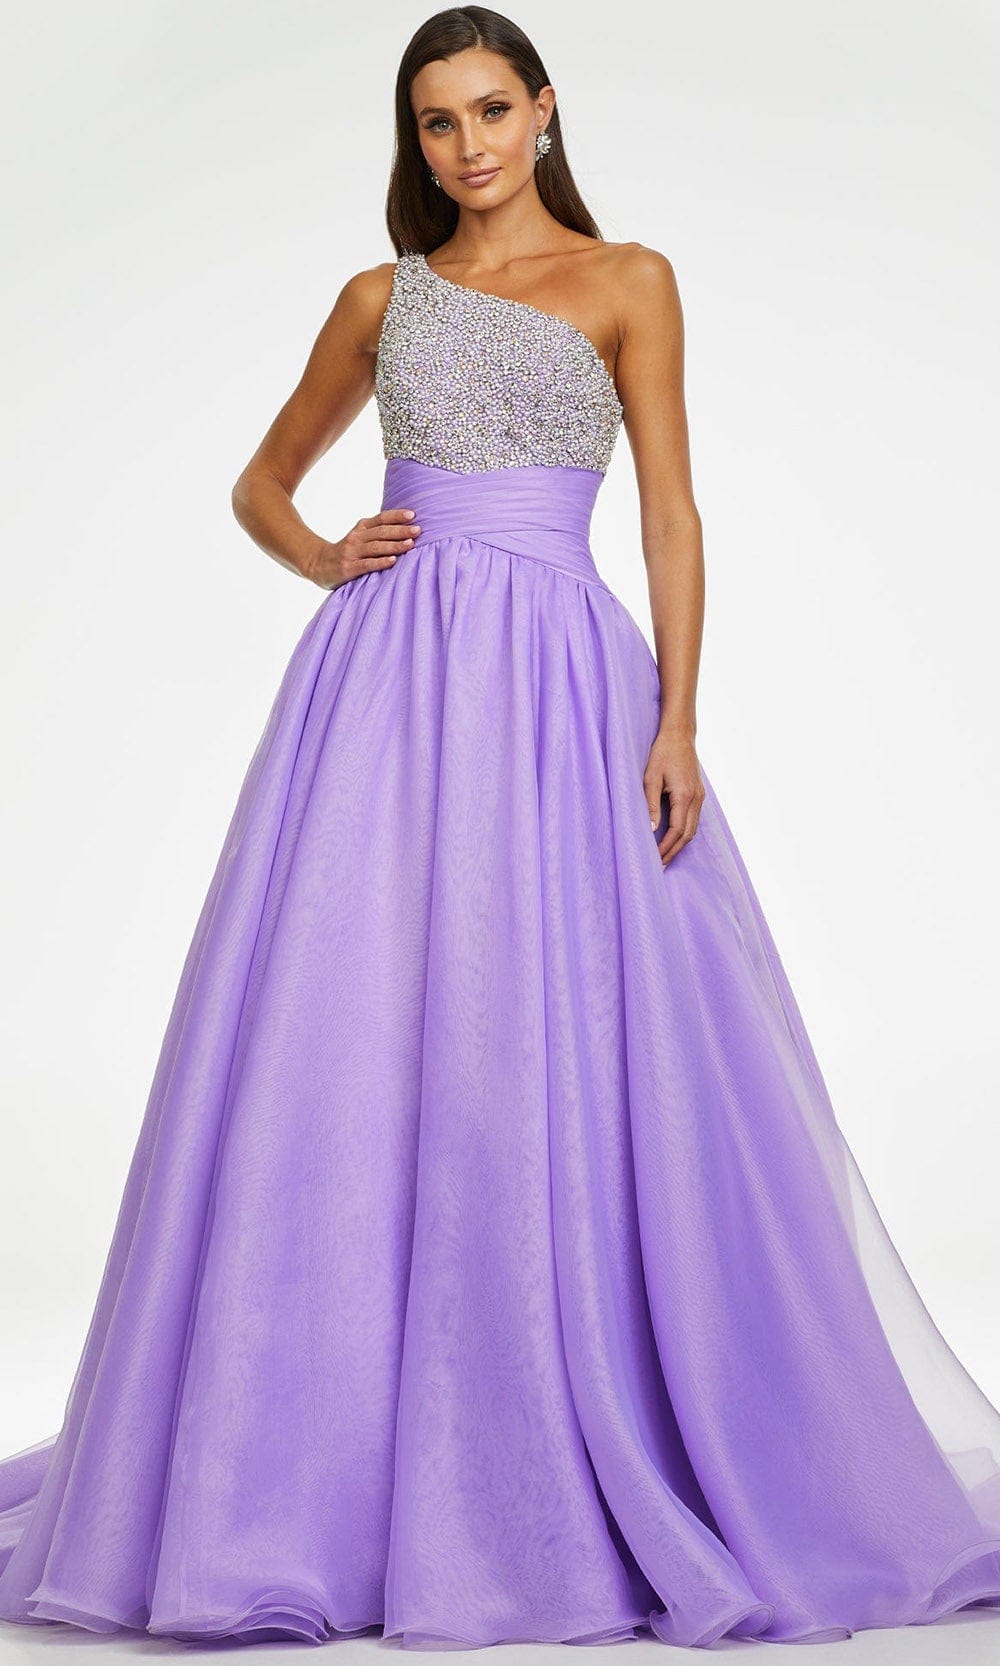 Ashley Lauren - 11127 Beaded Organza Ballgown Prom Dresses 0 / Orchid